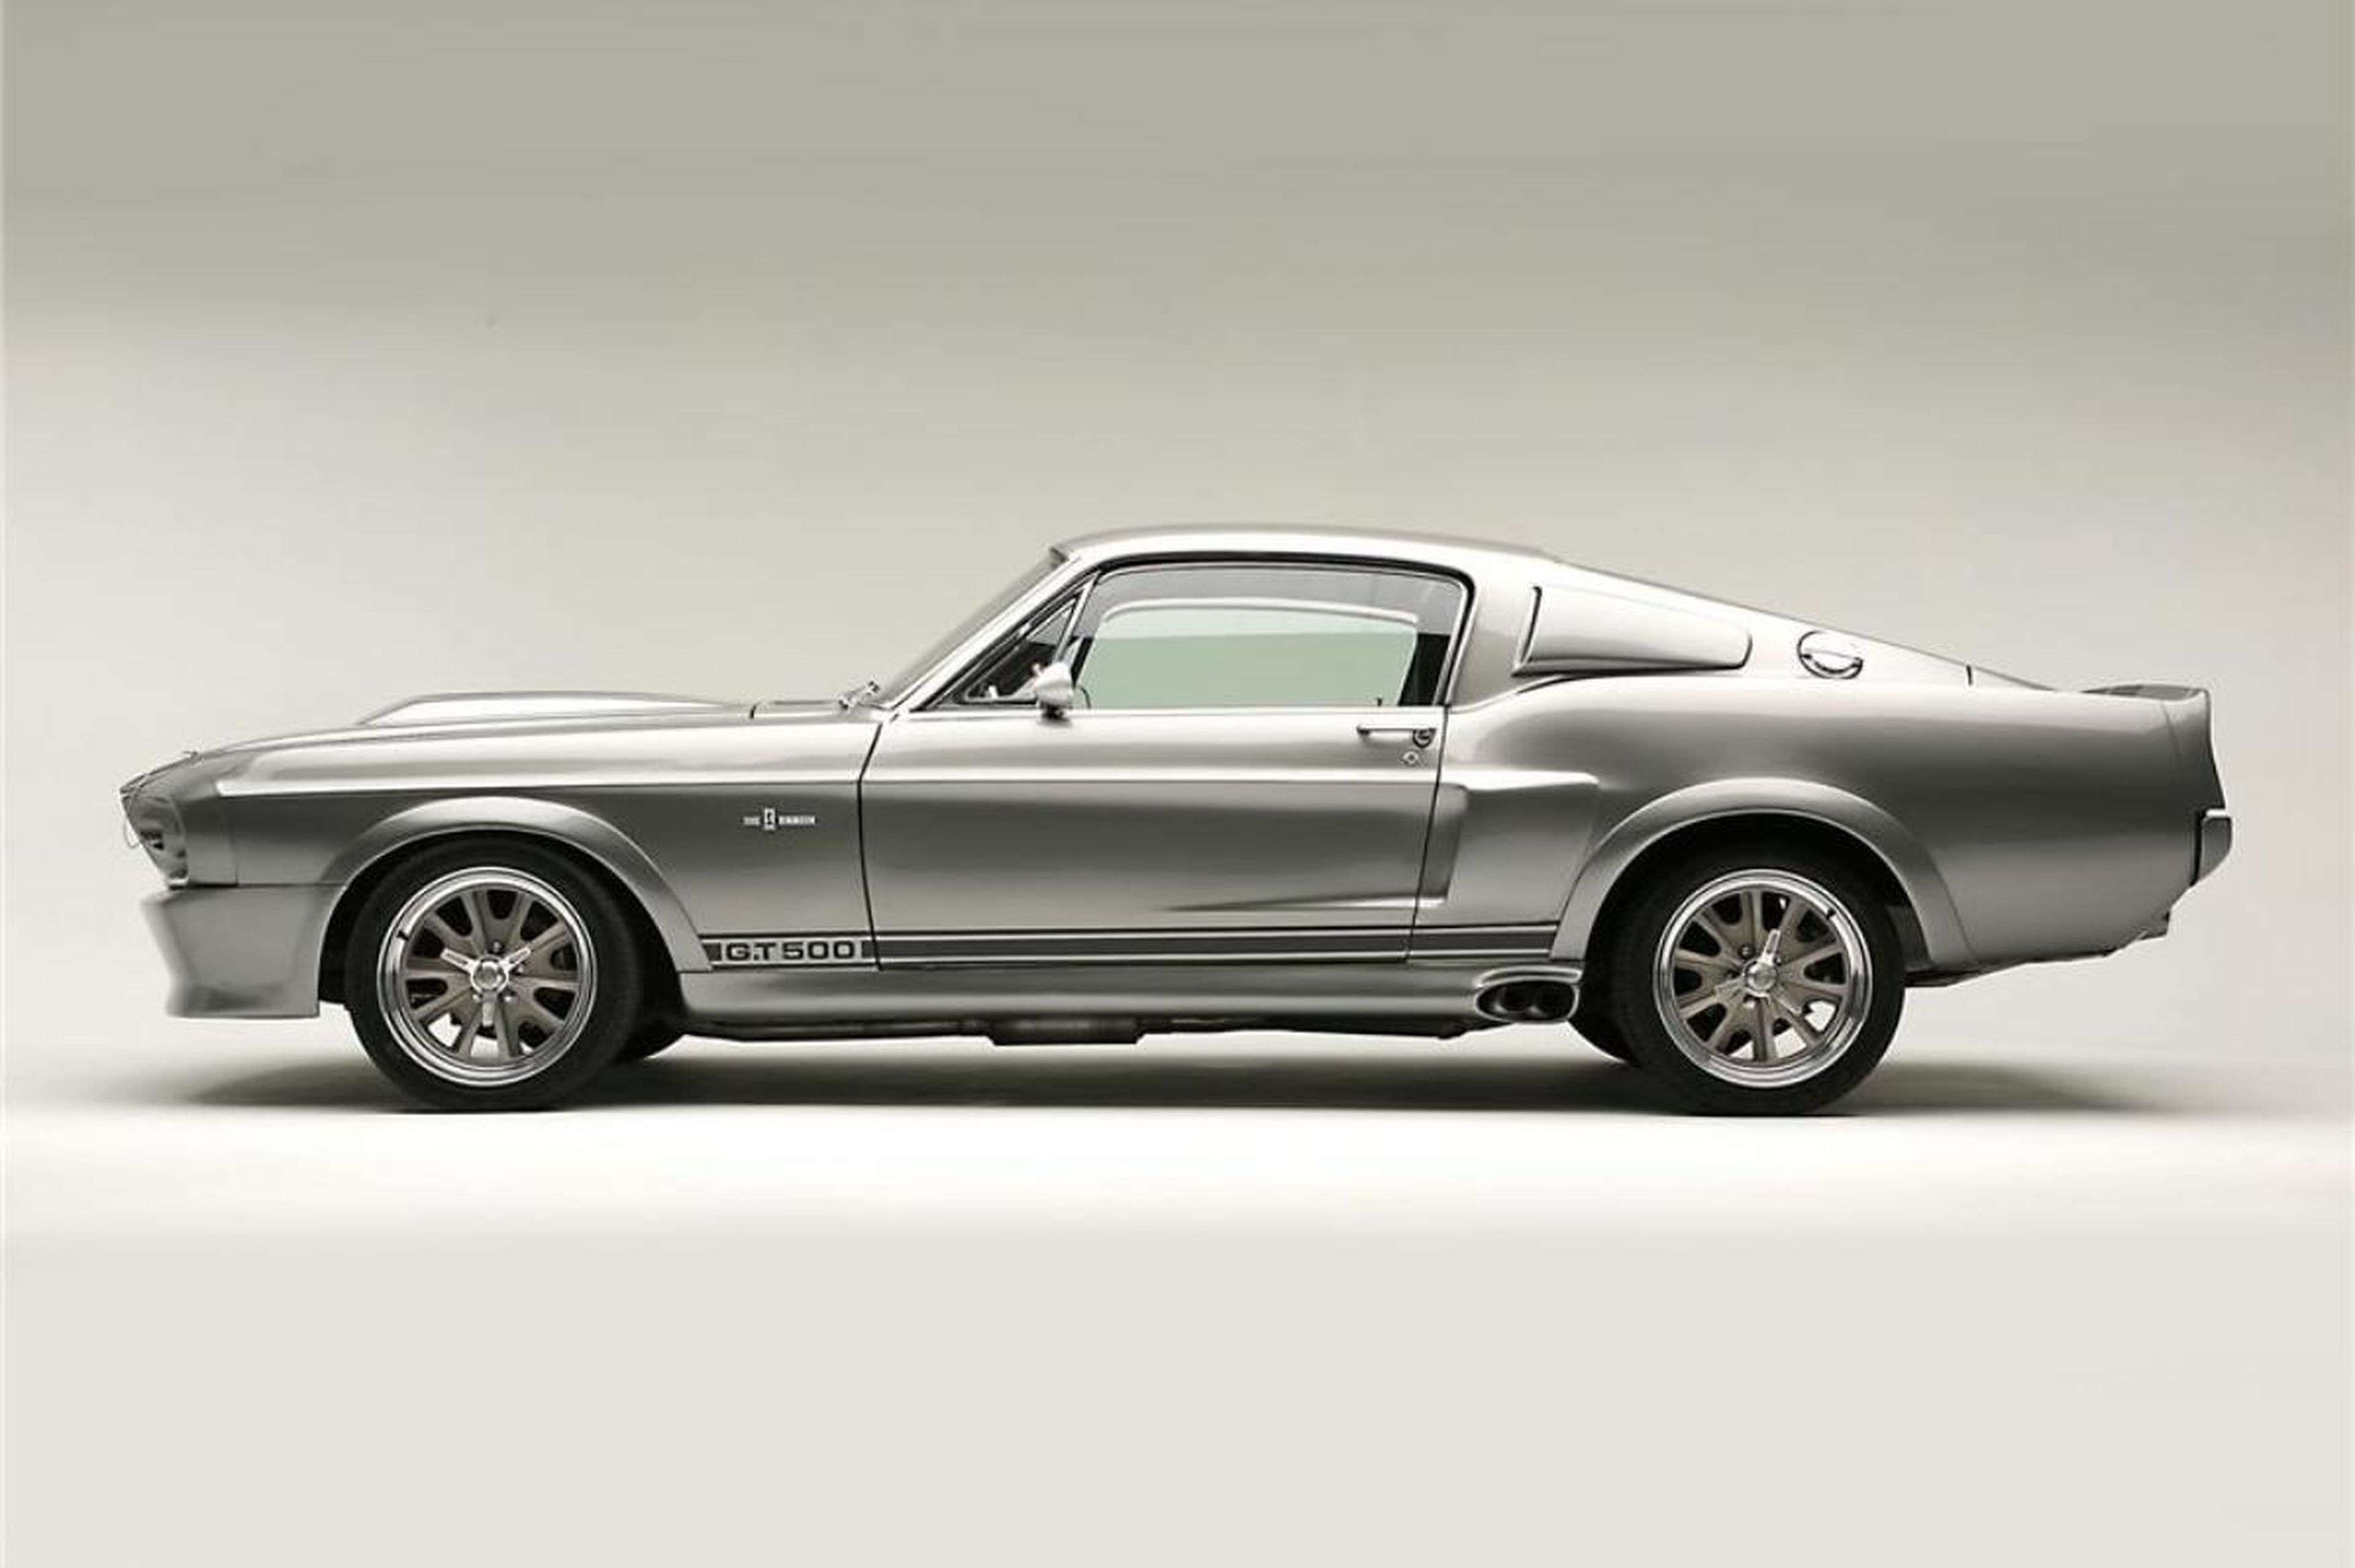 El Ford Mustang de ’60 segundos’, vendido por 342.000 euros